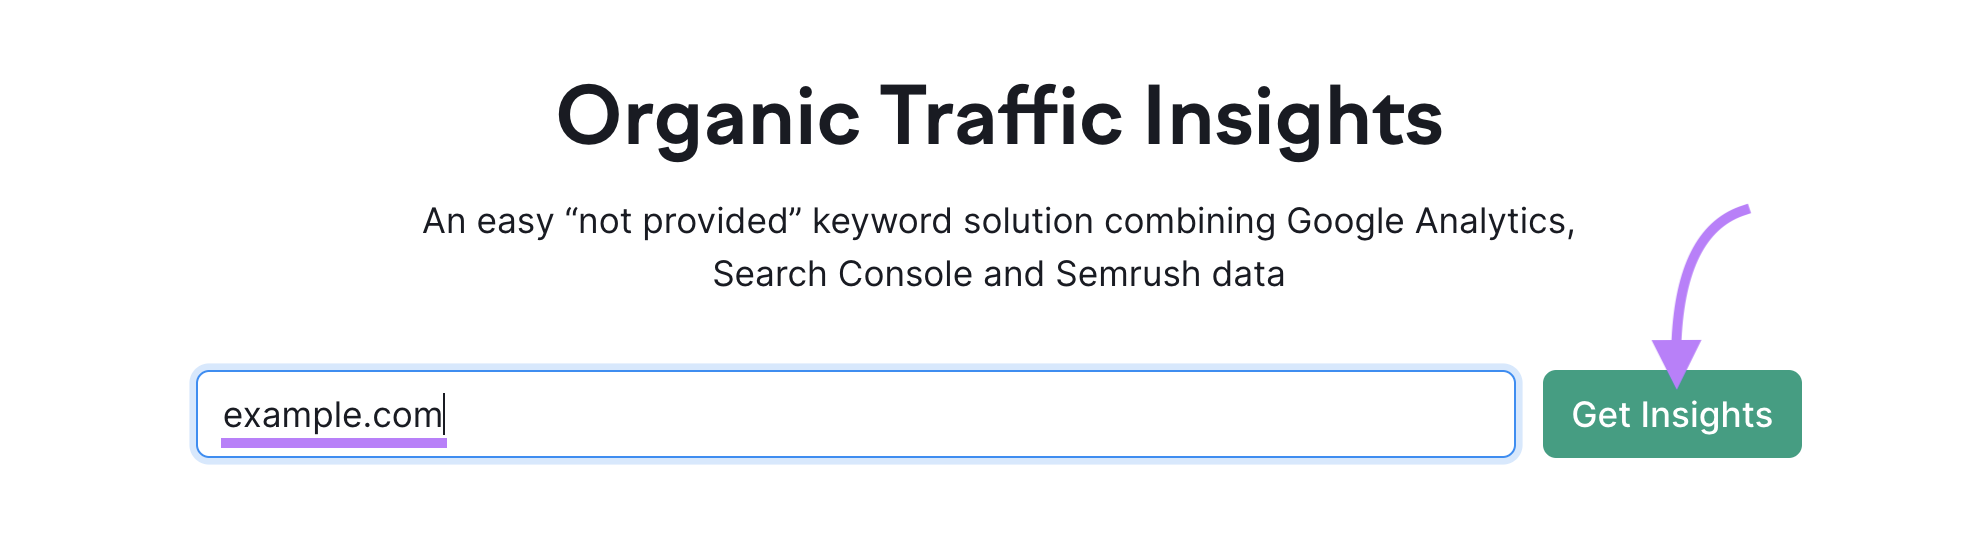 Organic Traffic Insights tool